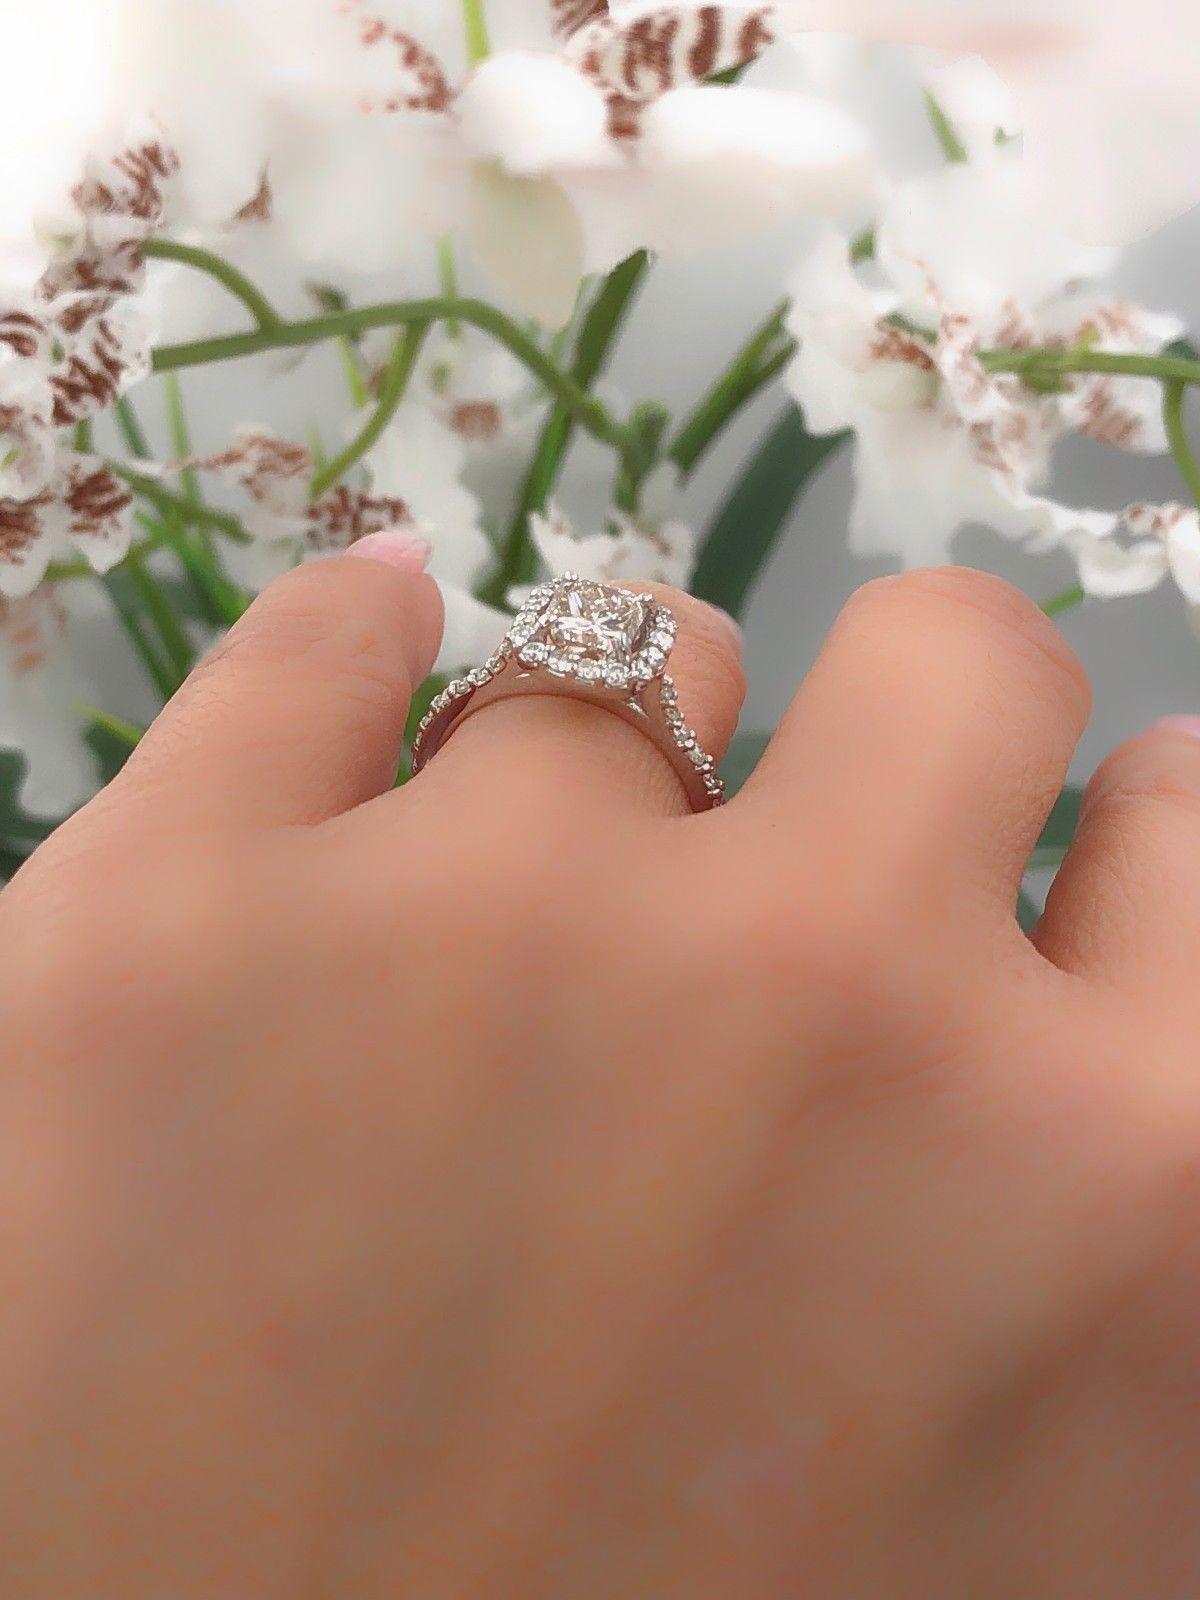 Radiant Cut Diamond Engagement Ring 1.70 Carat Halo Design in 14 Karat Gold For Sale 8